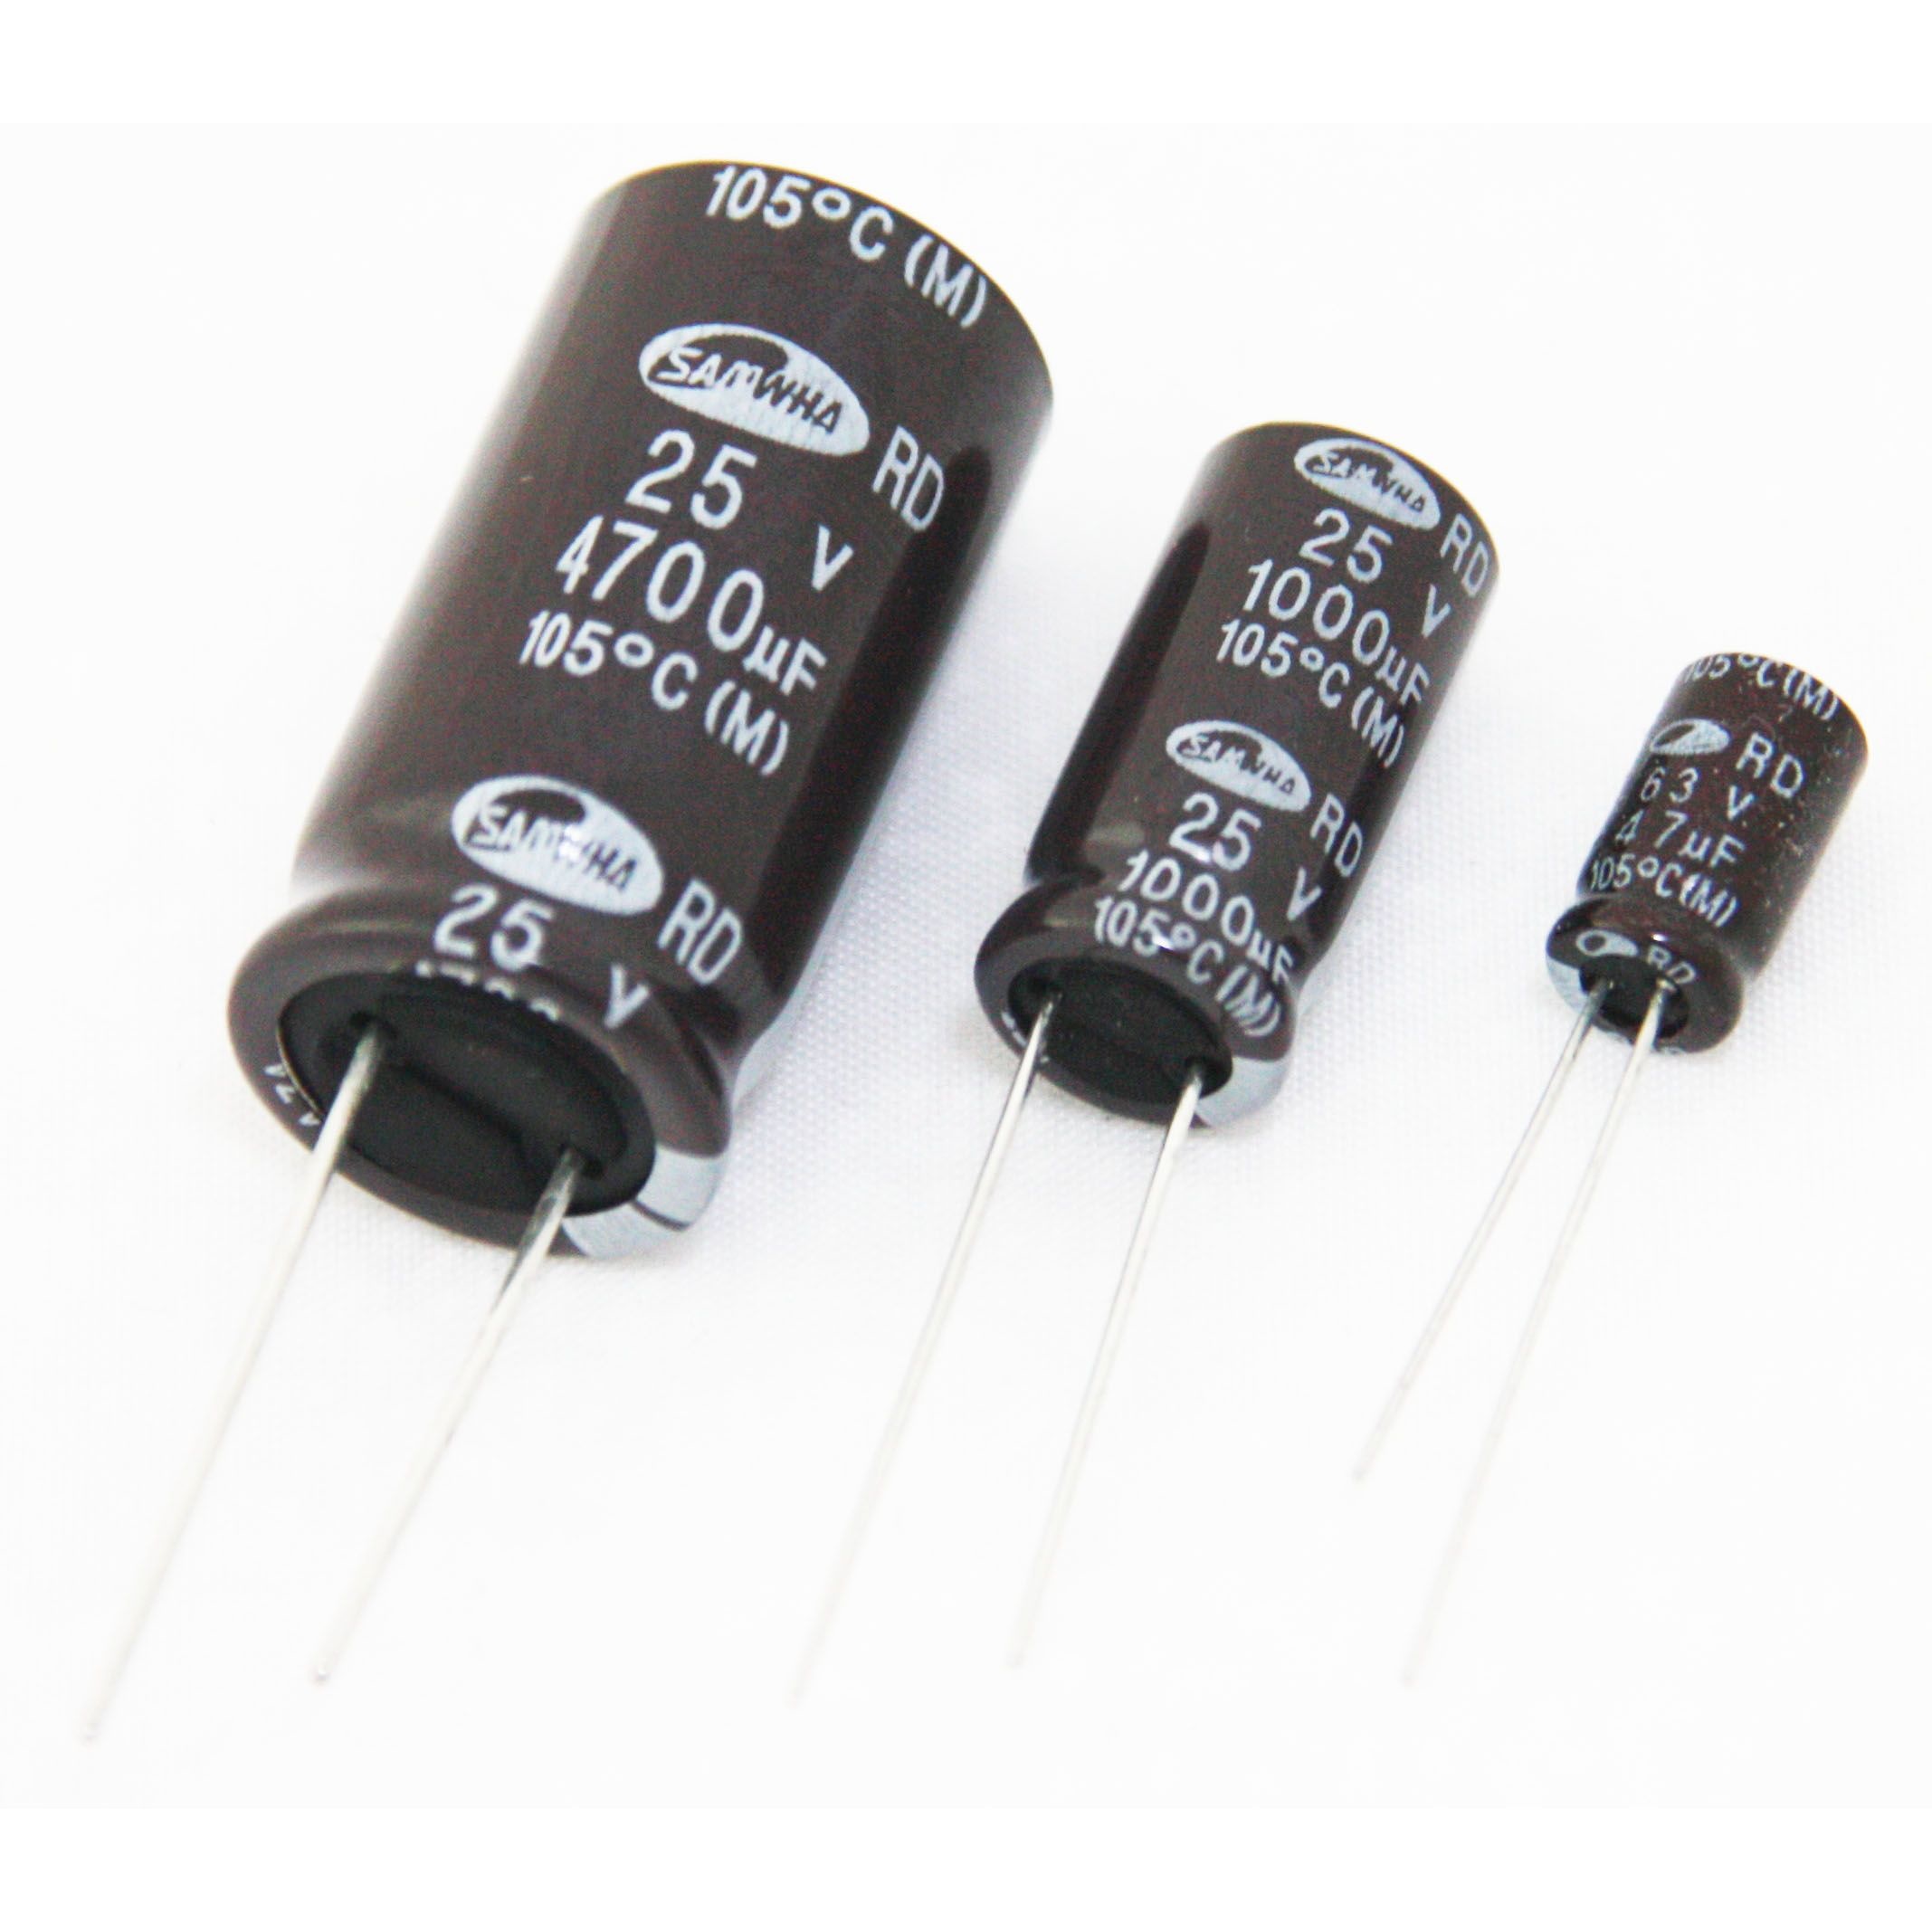 Electrolytic capacitor 105° 33uF-250V